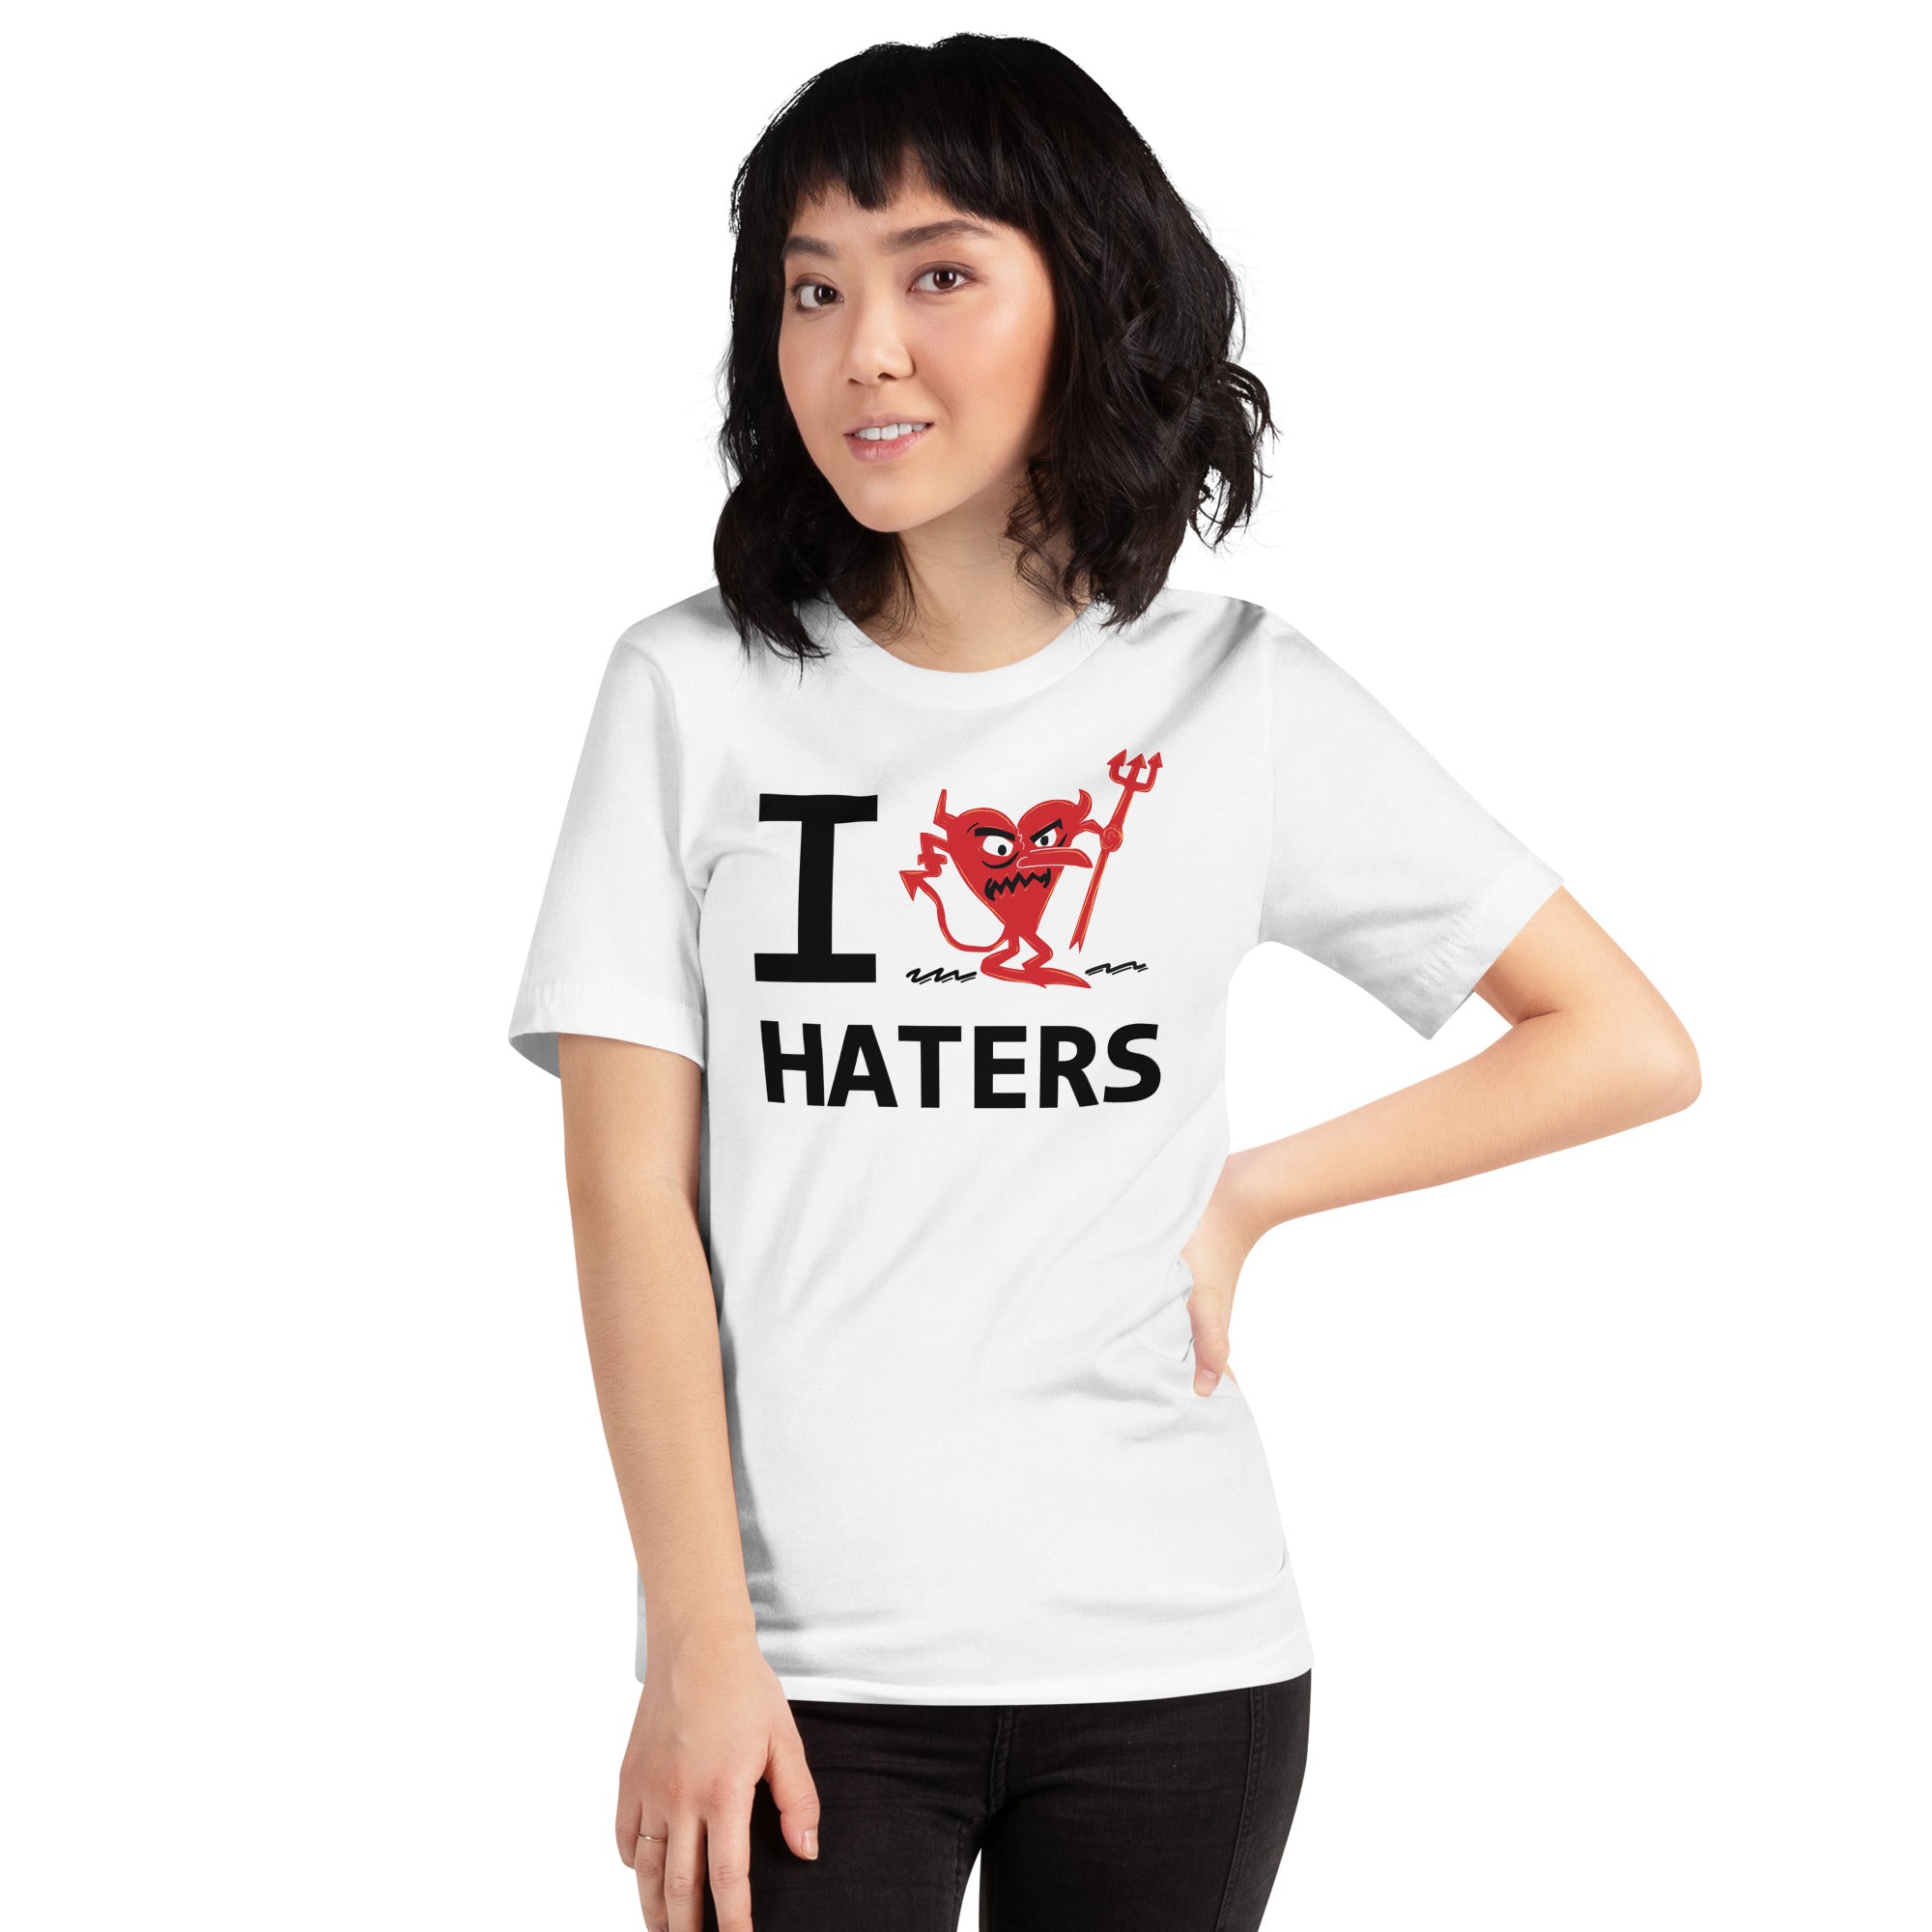 HATERS Unisex t-shirt